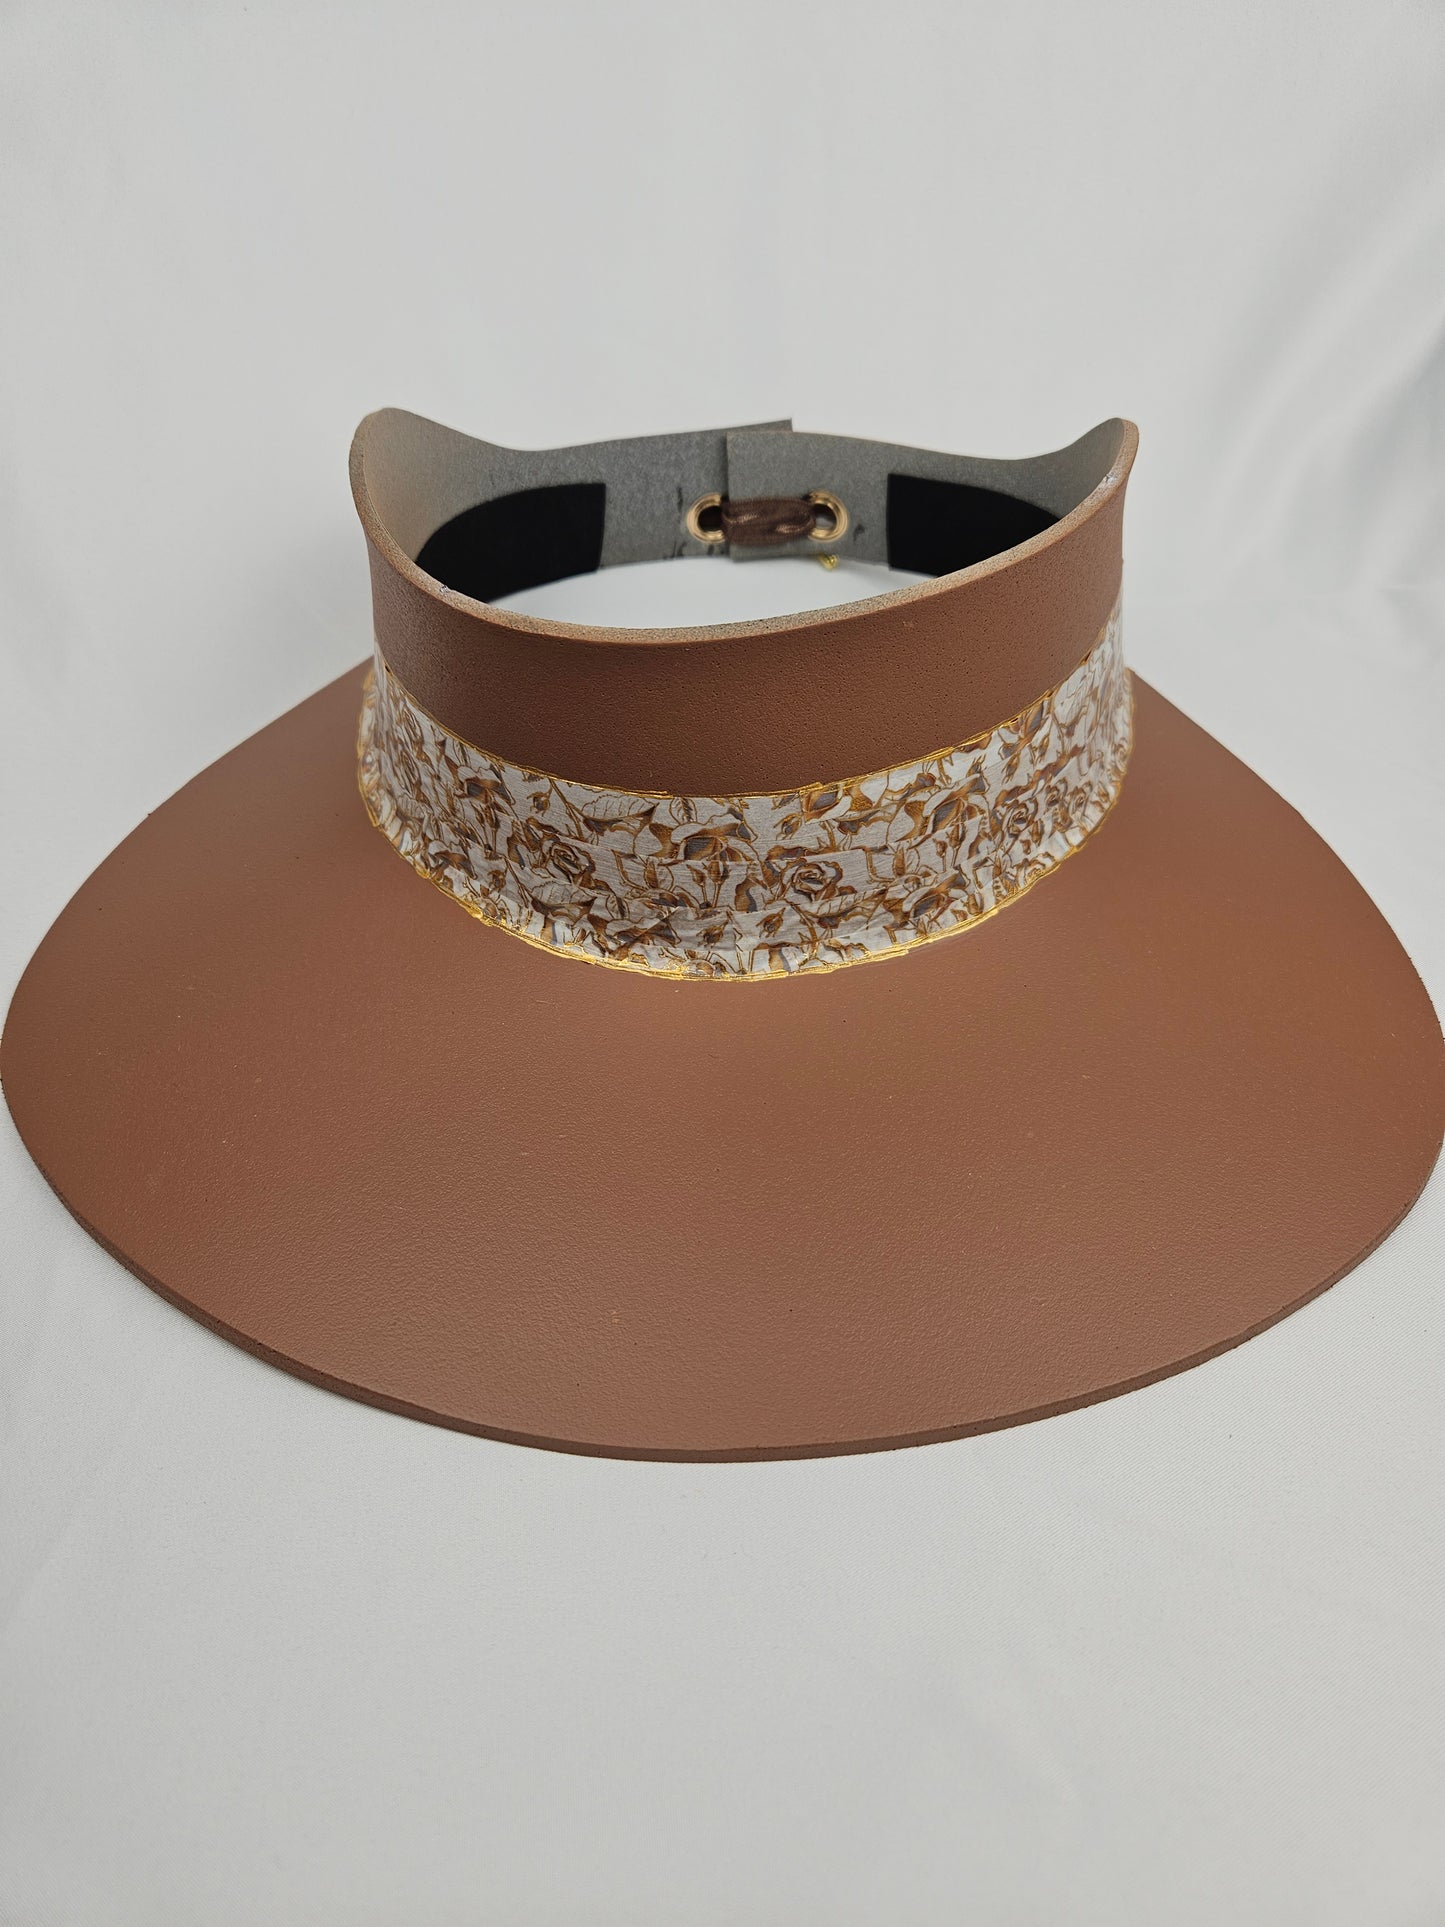 Tall Caramel Brown Audrey Sun Visor Hat with Elegant Gold and White Floral Band: 1940s, Walks, Brunch, Tea, Golf, Wedding, Church, No Headache, Easter, Pool, Beach, Big Brim